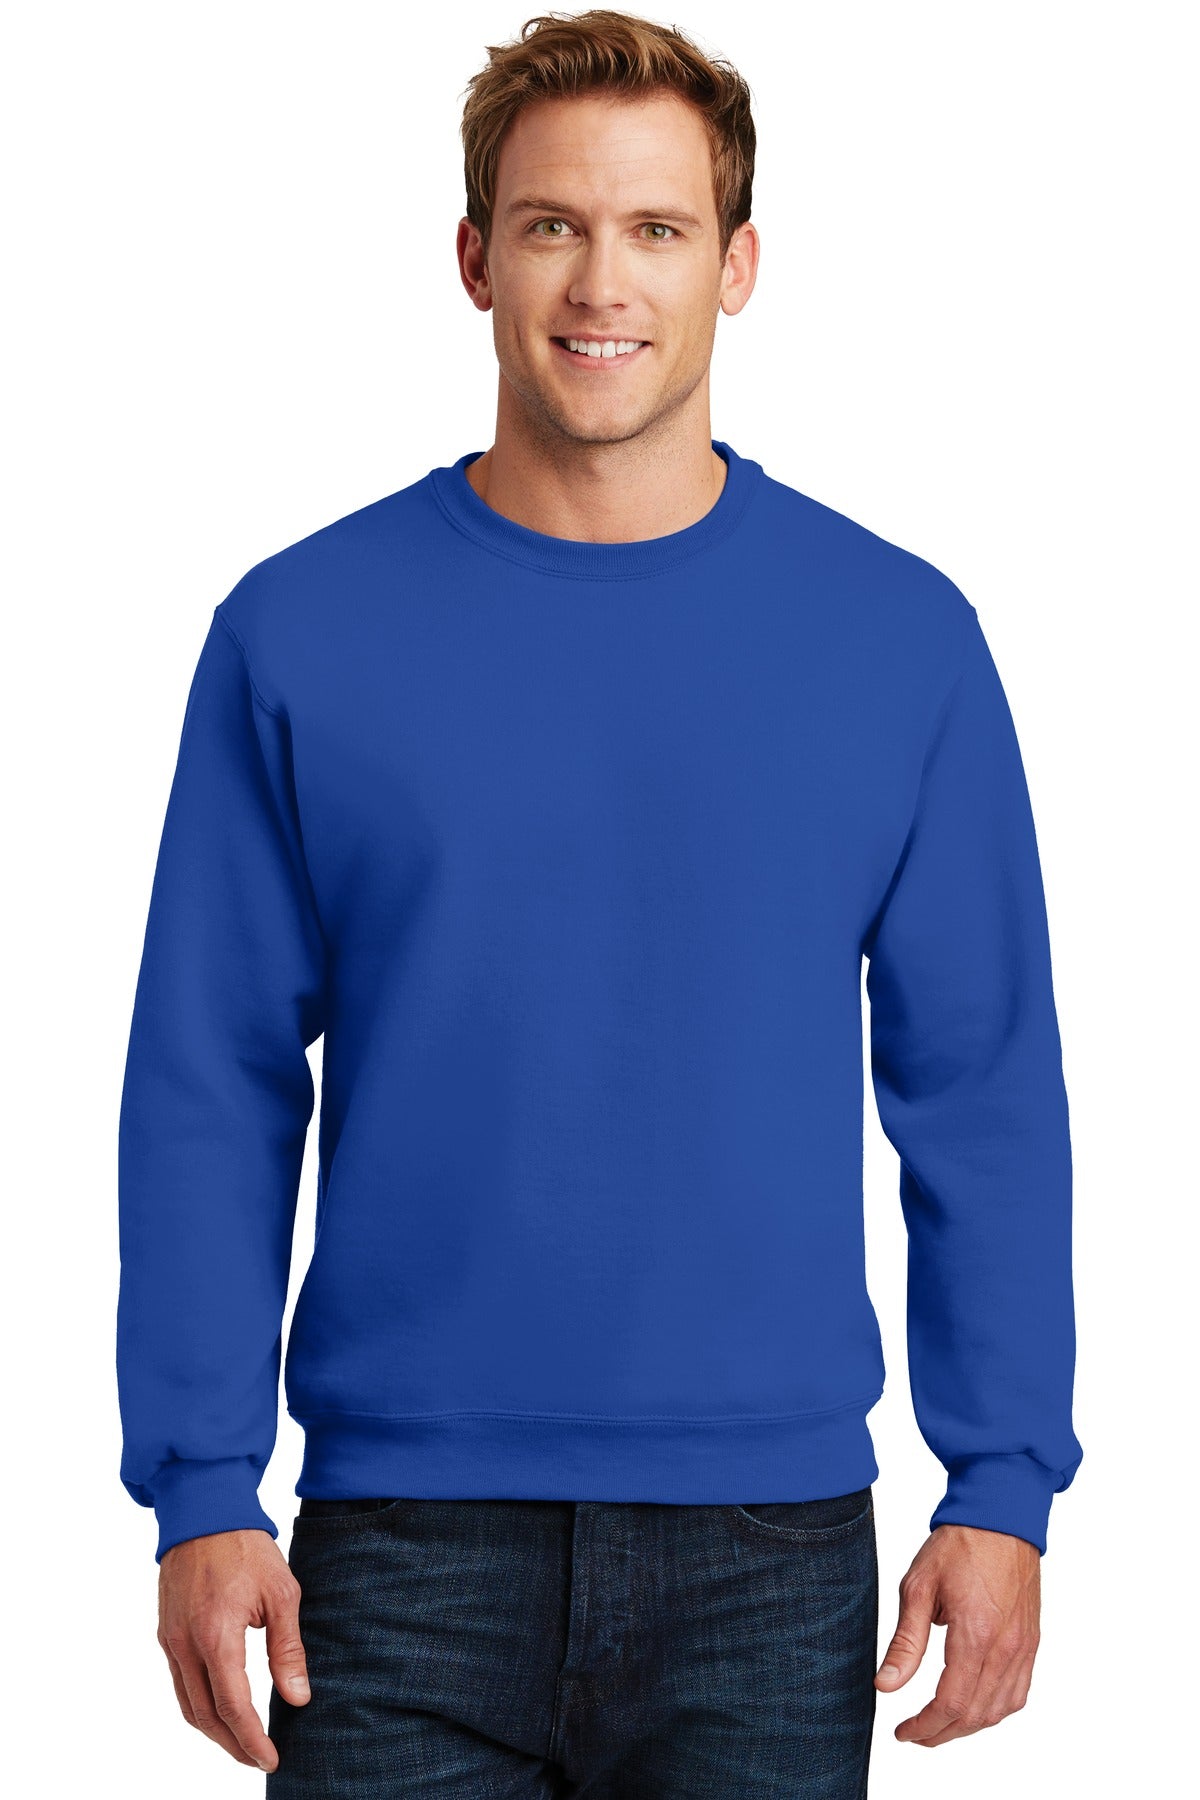 JERZEES® SUPER SWEATS® NuBlend® - Crewneck Sweatshirt. 4662M - DFW Impression